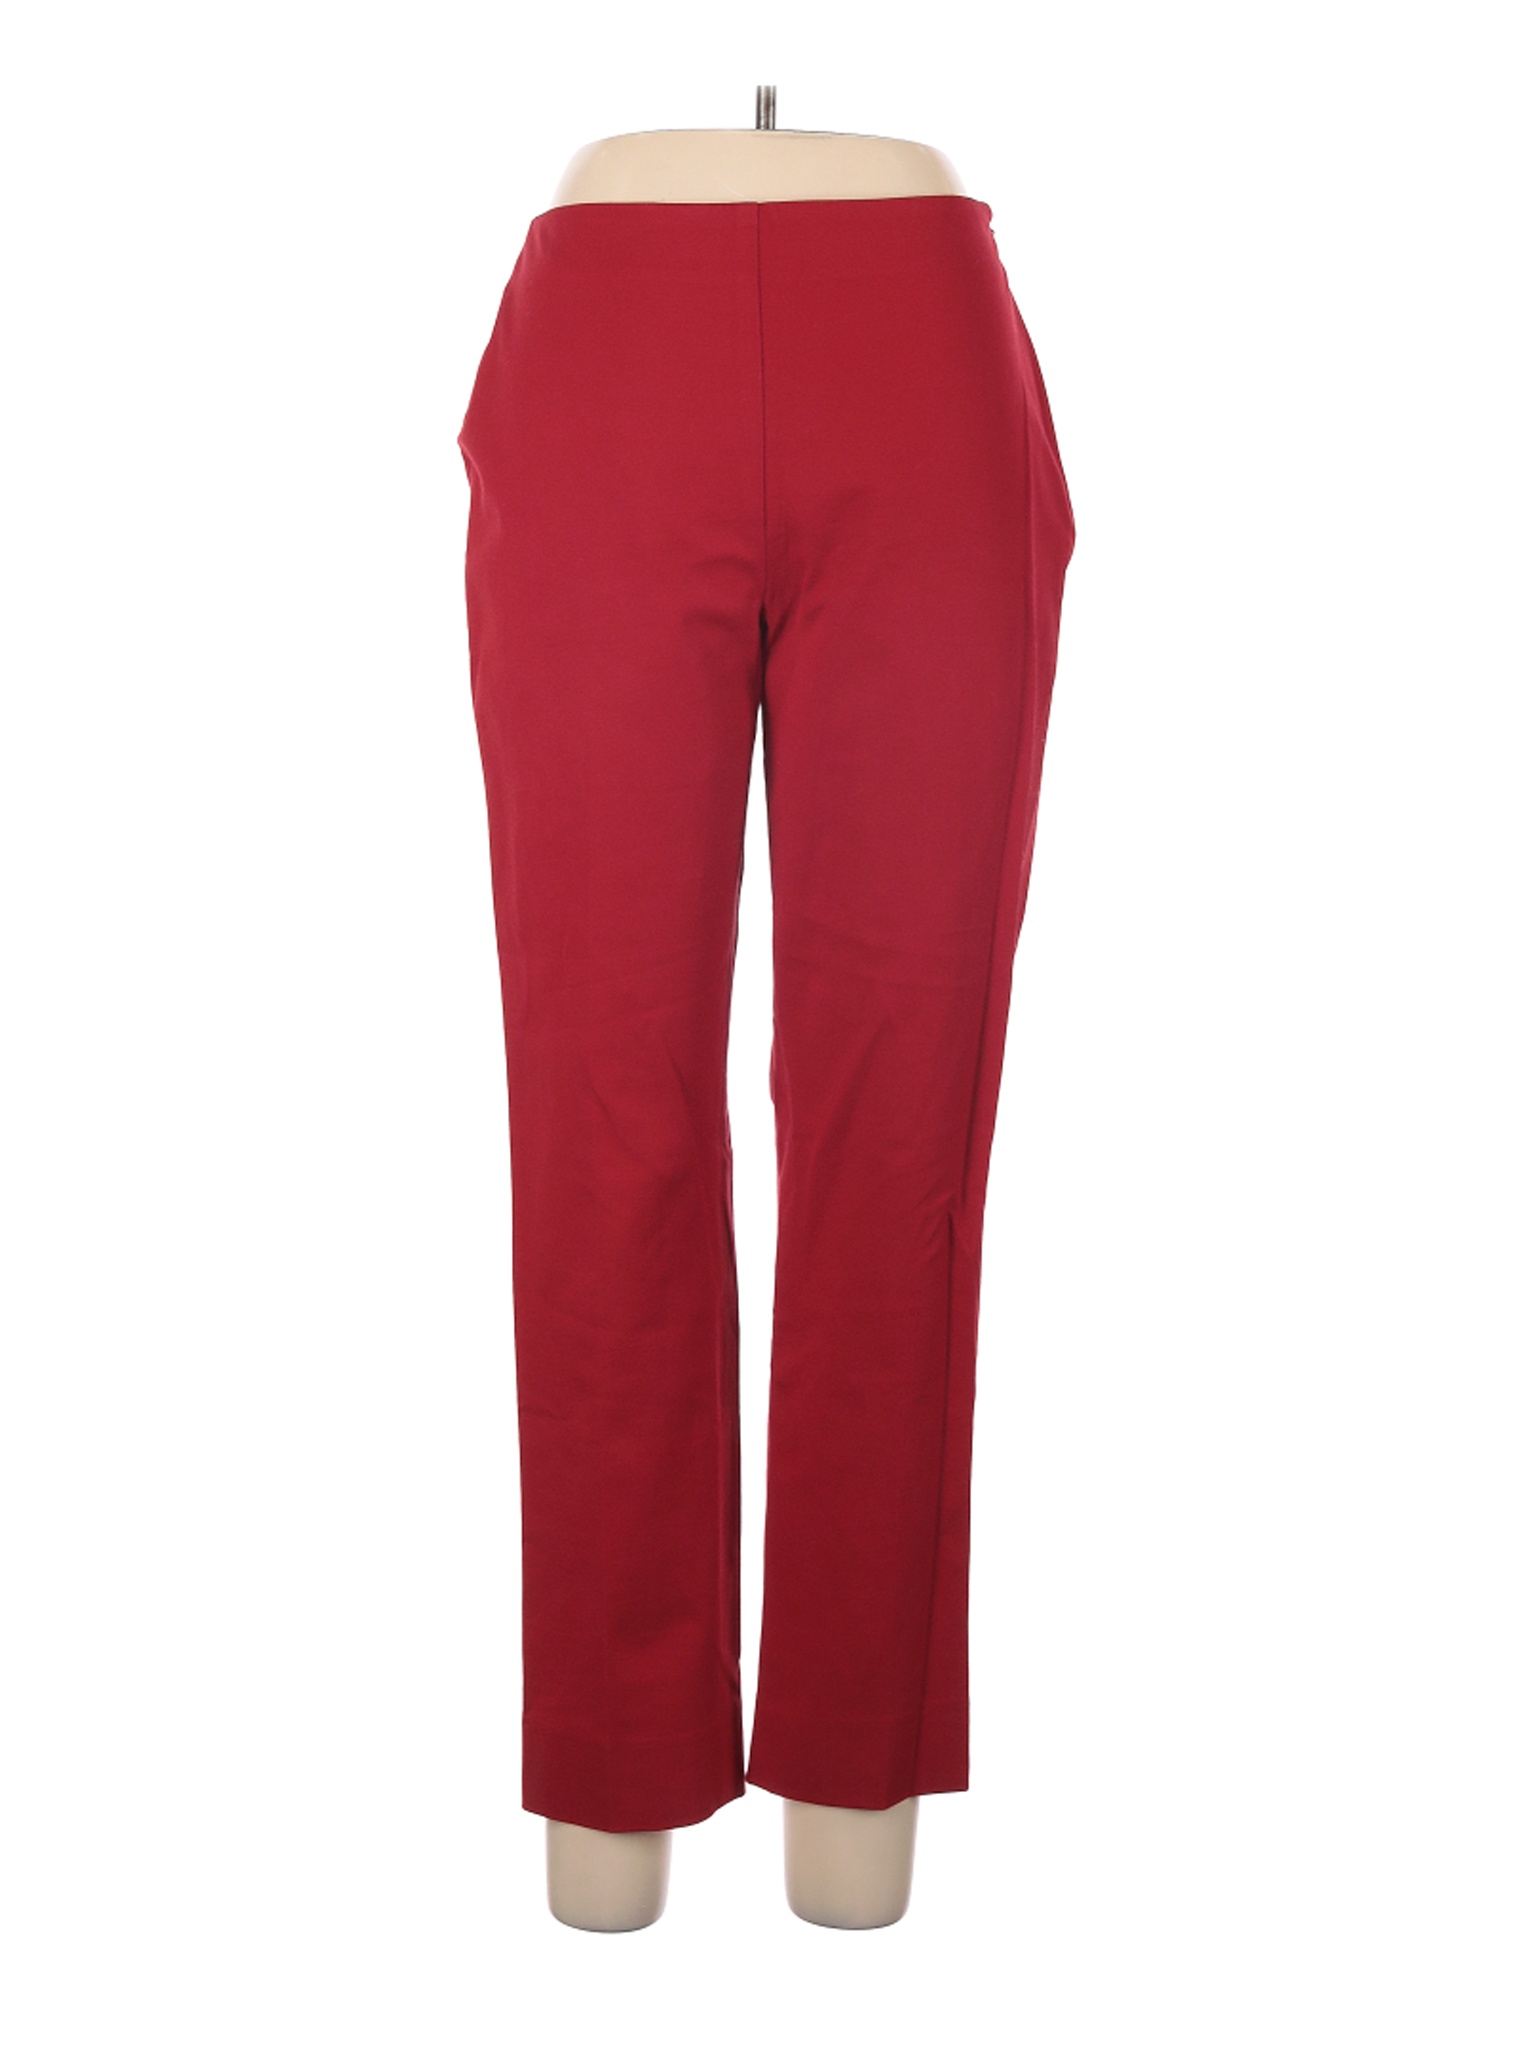 INC International Concepts Women Red Casual Pants 10 Petites | eBay